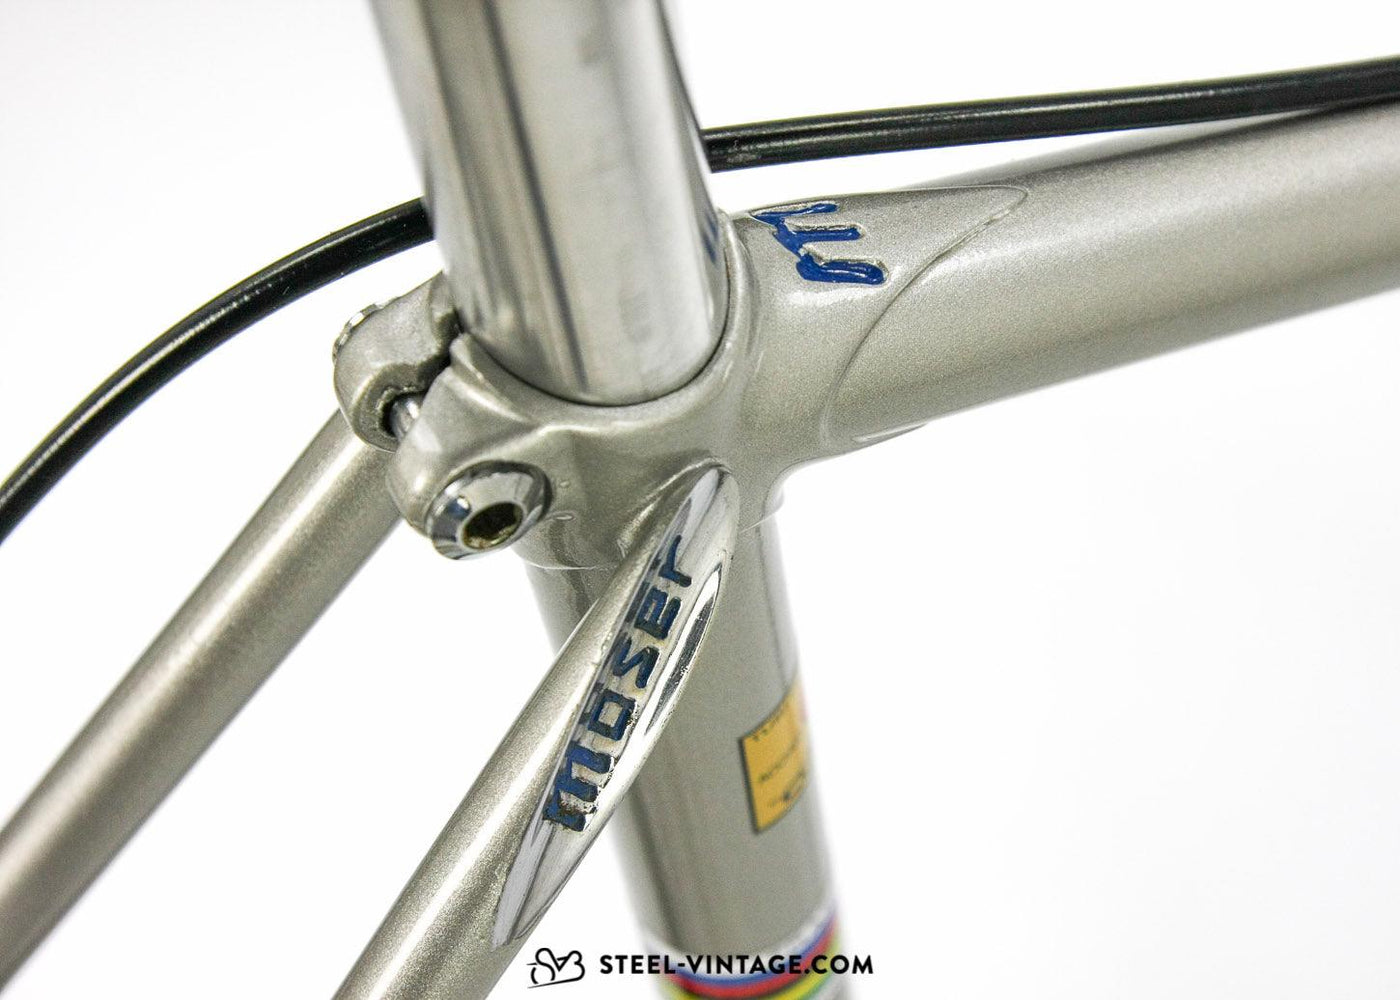 F. Moser Super Prestige 1977 Classic Road Bicycle - Steel Vintage Bikes